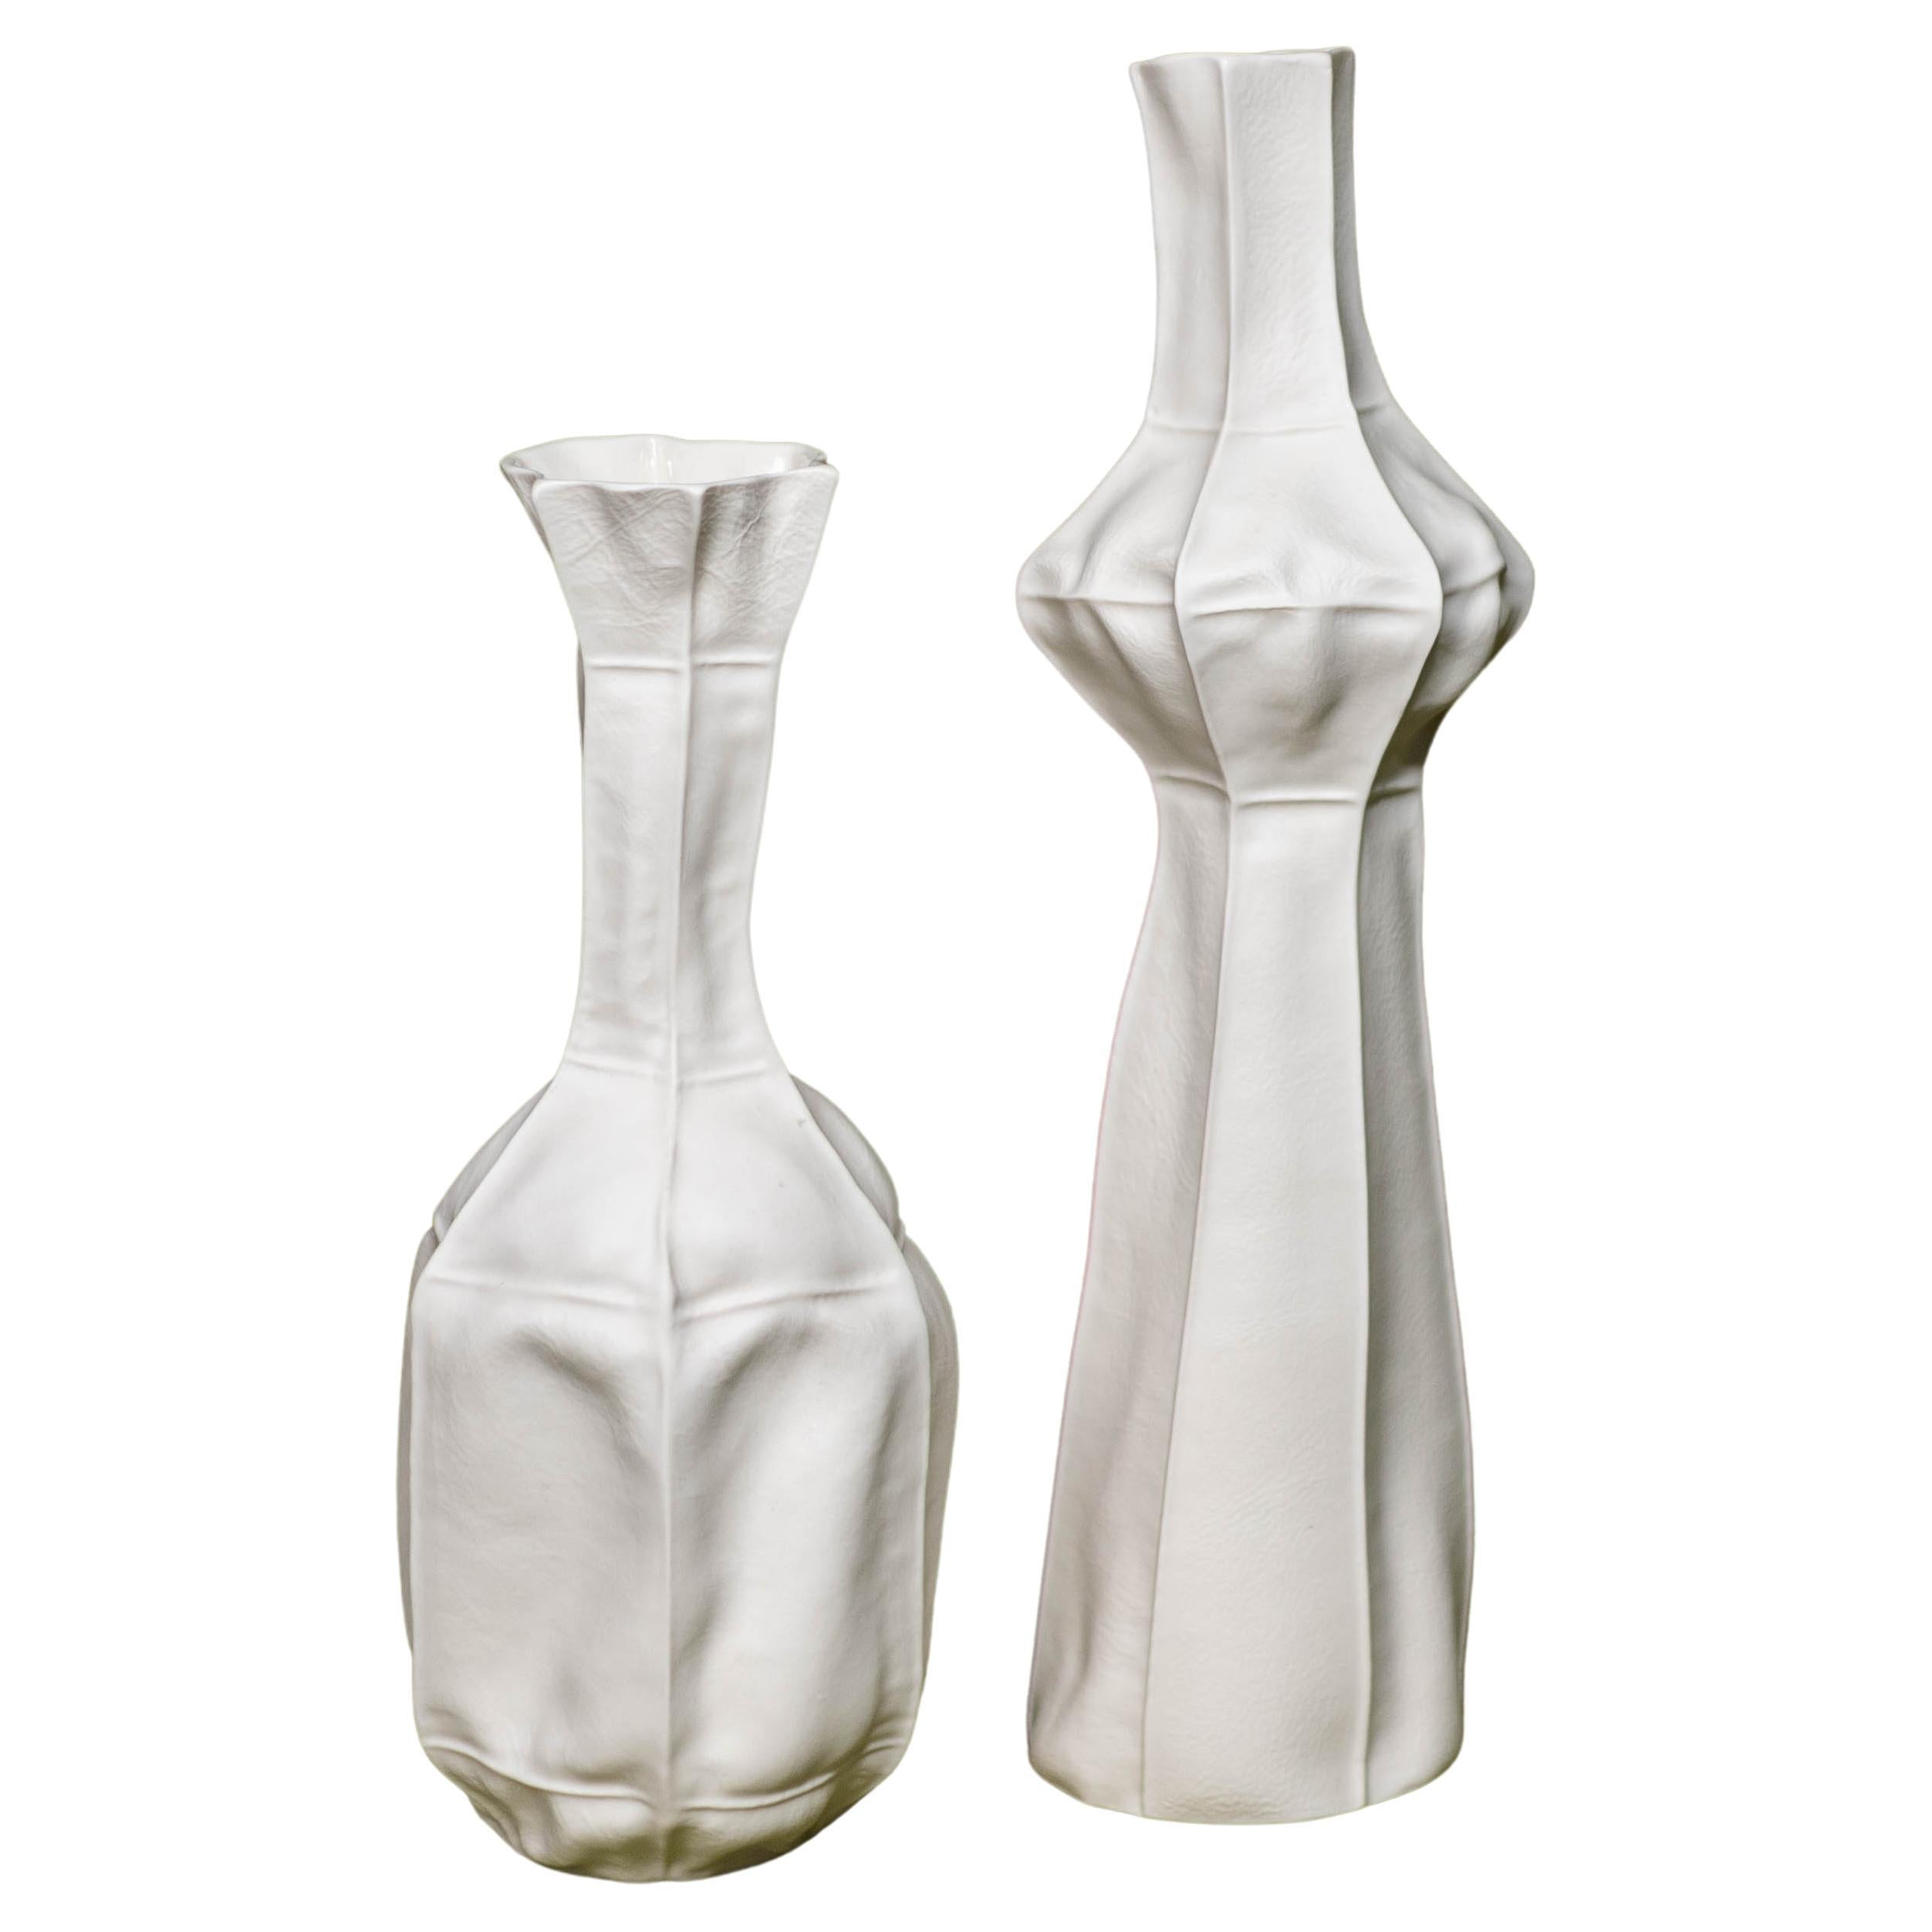 Pair of Sculptural White Ceramic Kawa Vases, by Luft Tanaka, organic, porcelain